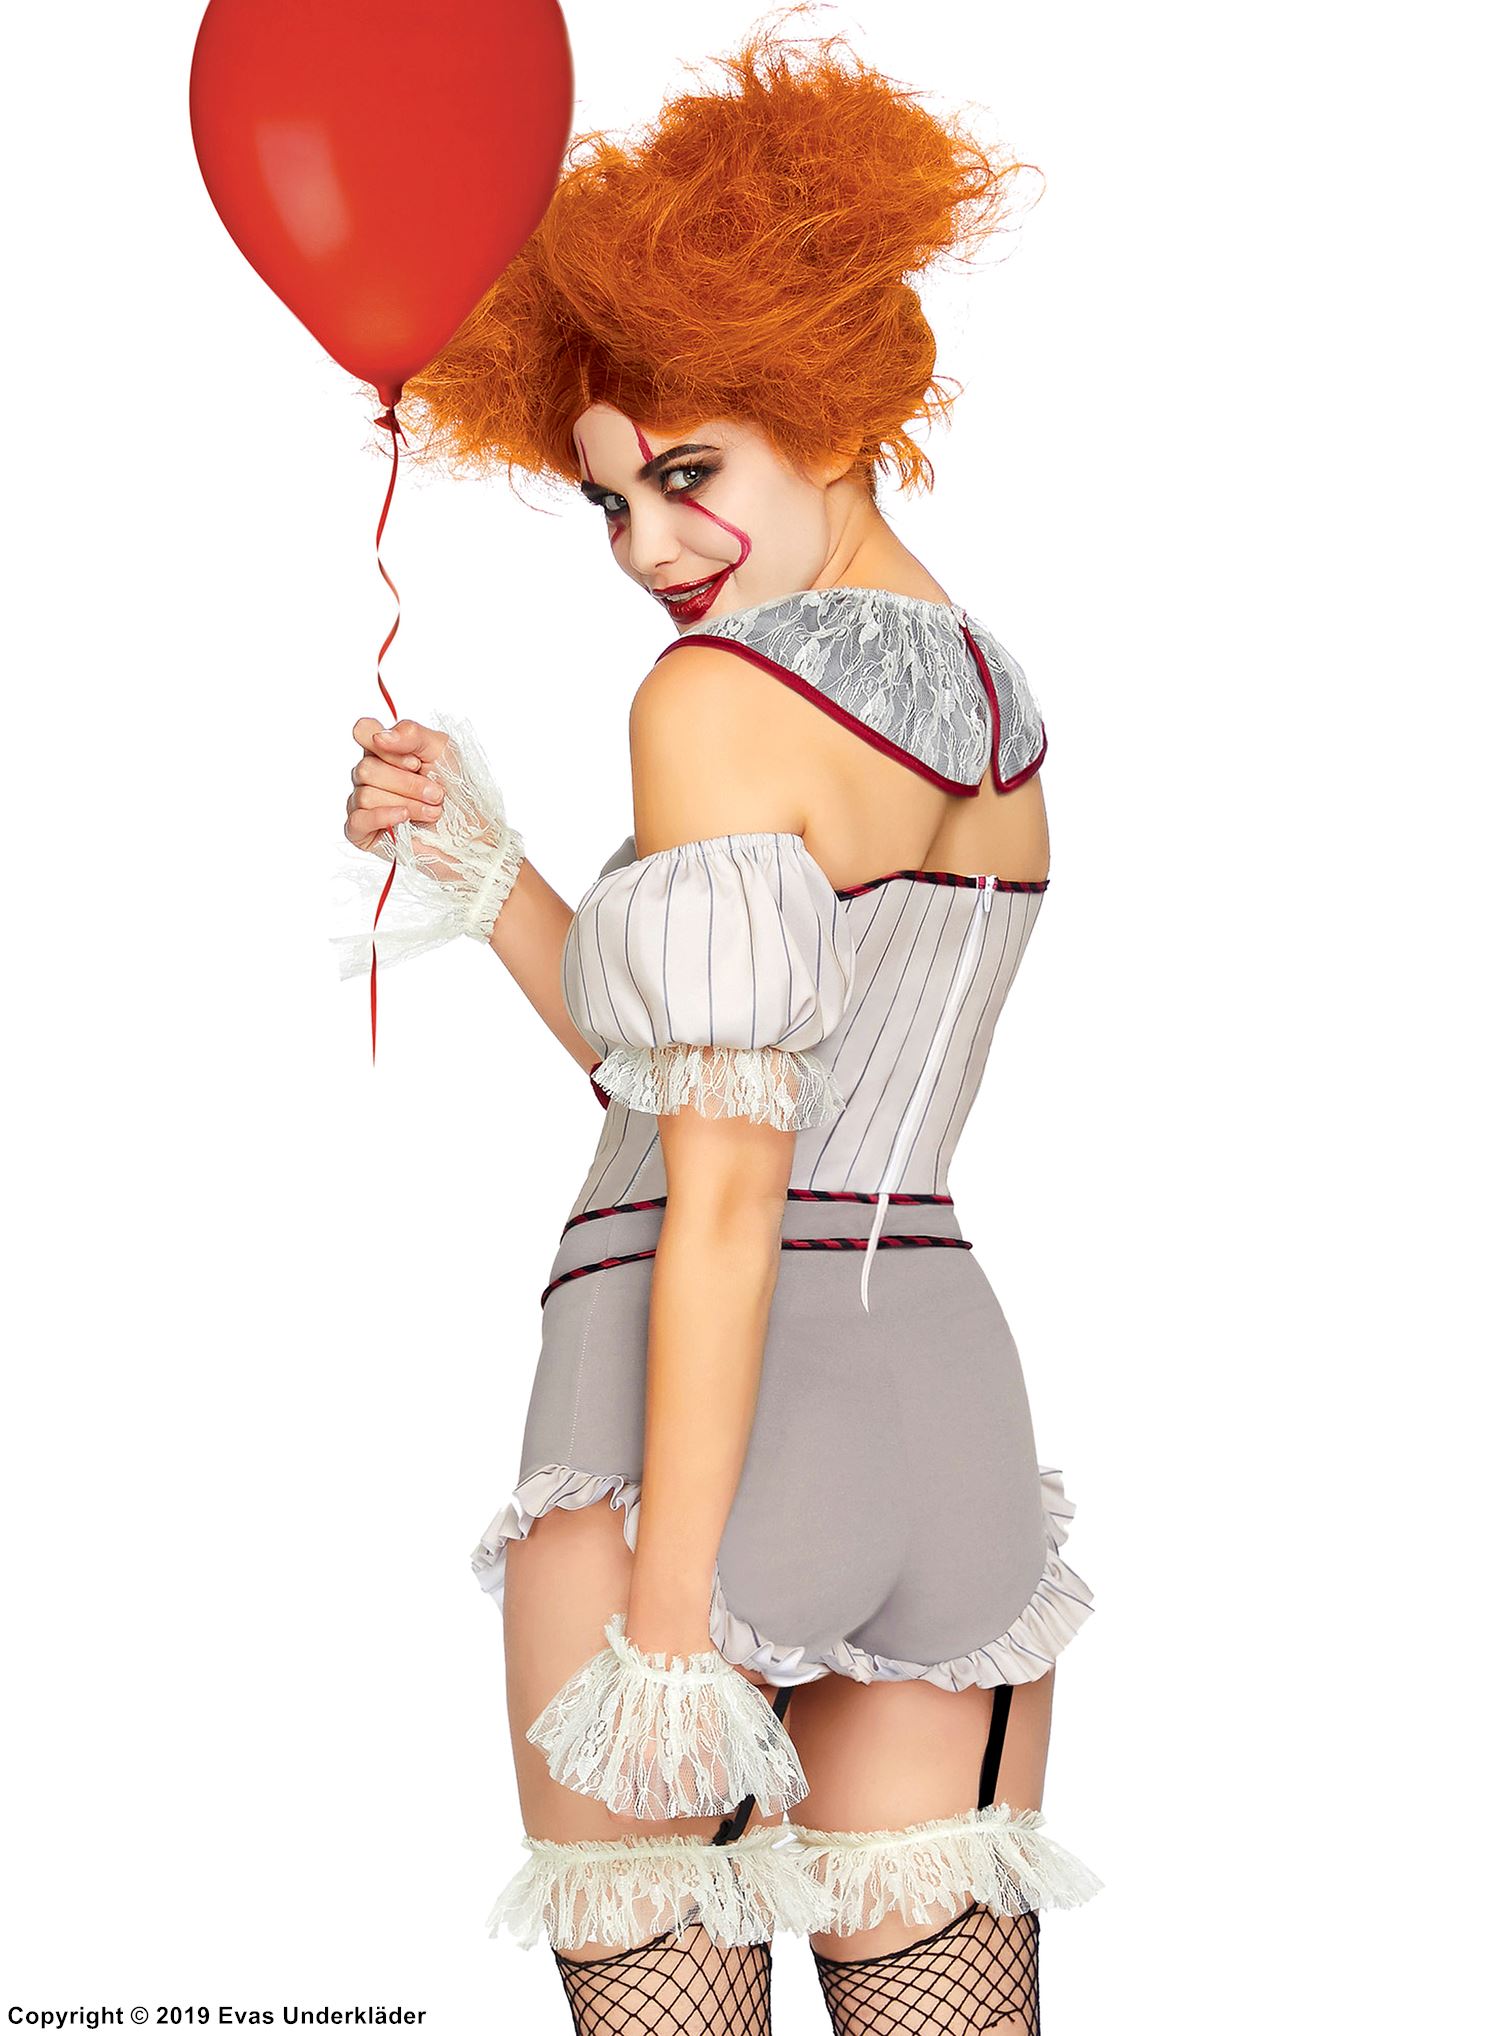 Creepy female clown from IT, costume romper, ruffles, pom pom buttons, stripes